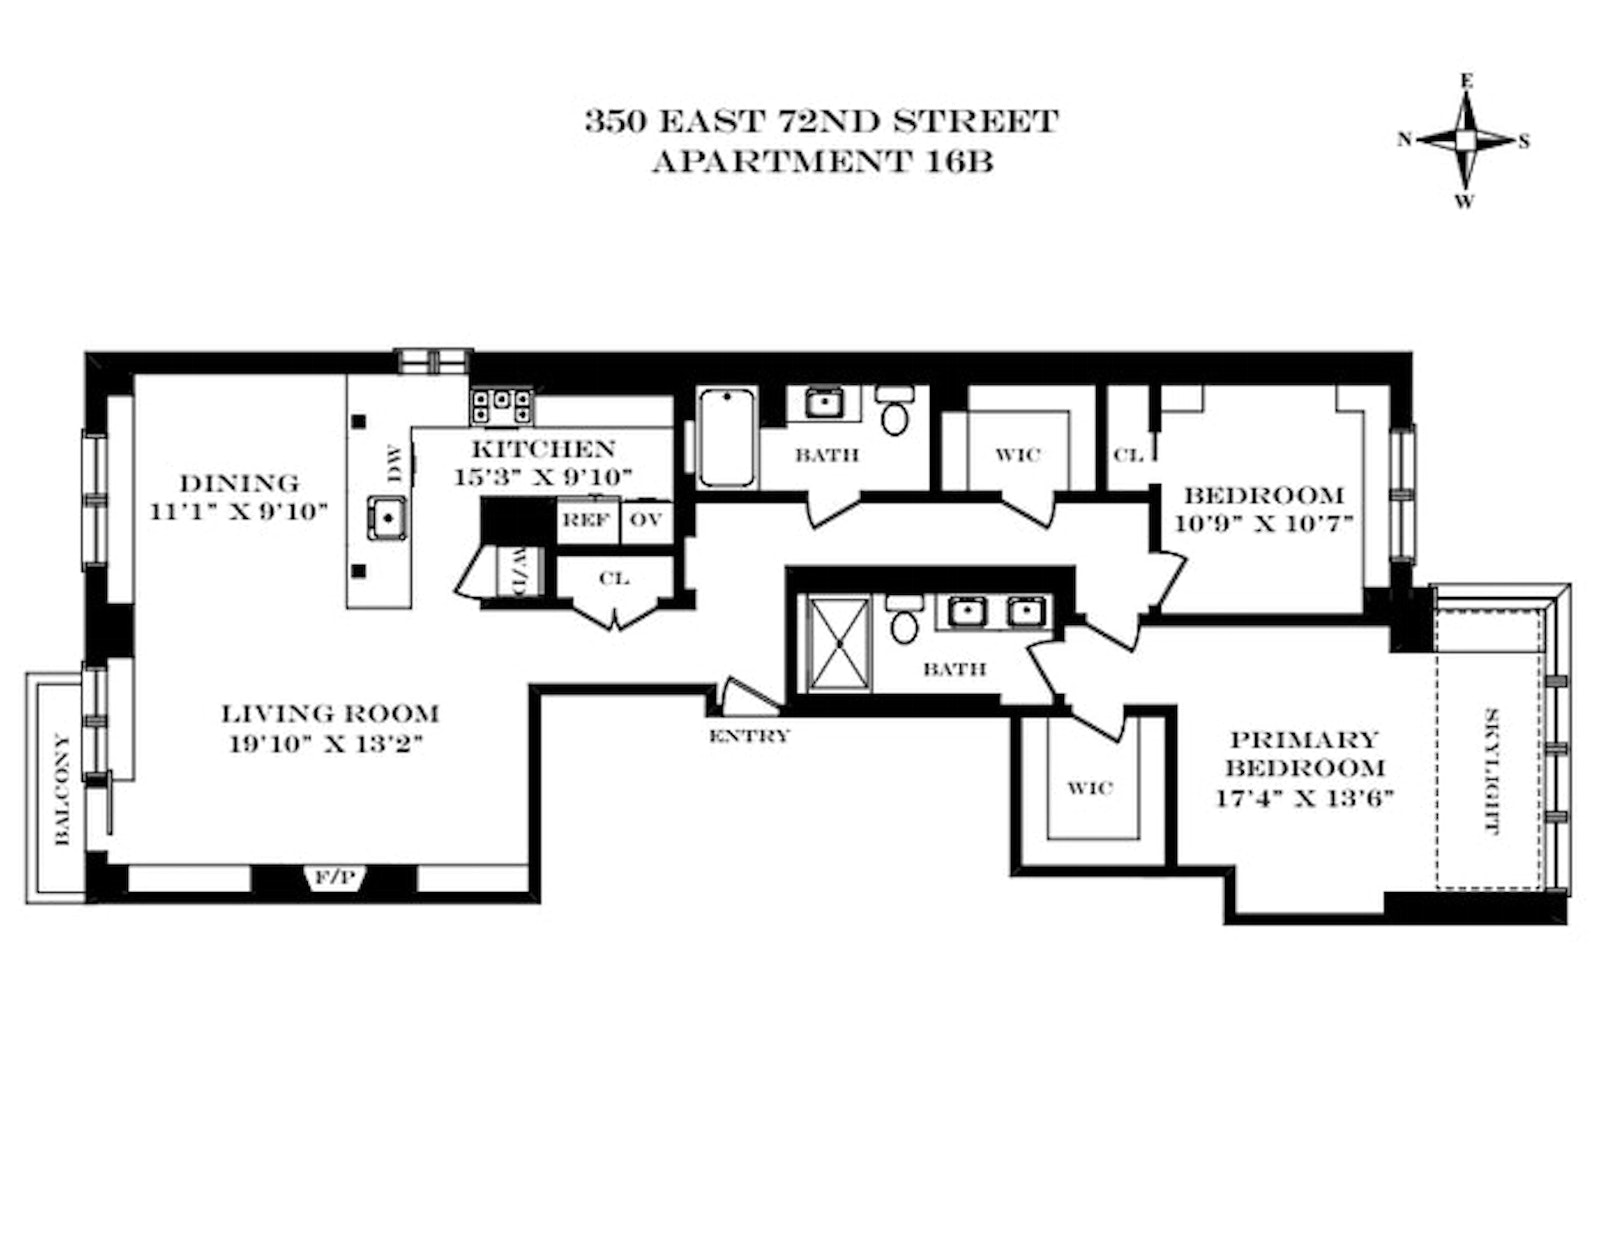 Floorplan for 350 East 72nd Street, 16B